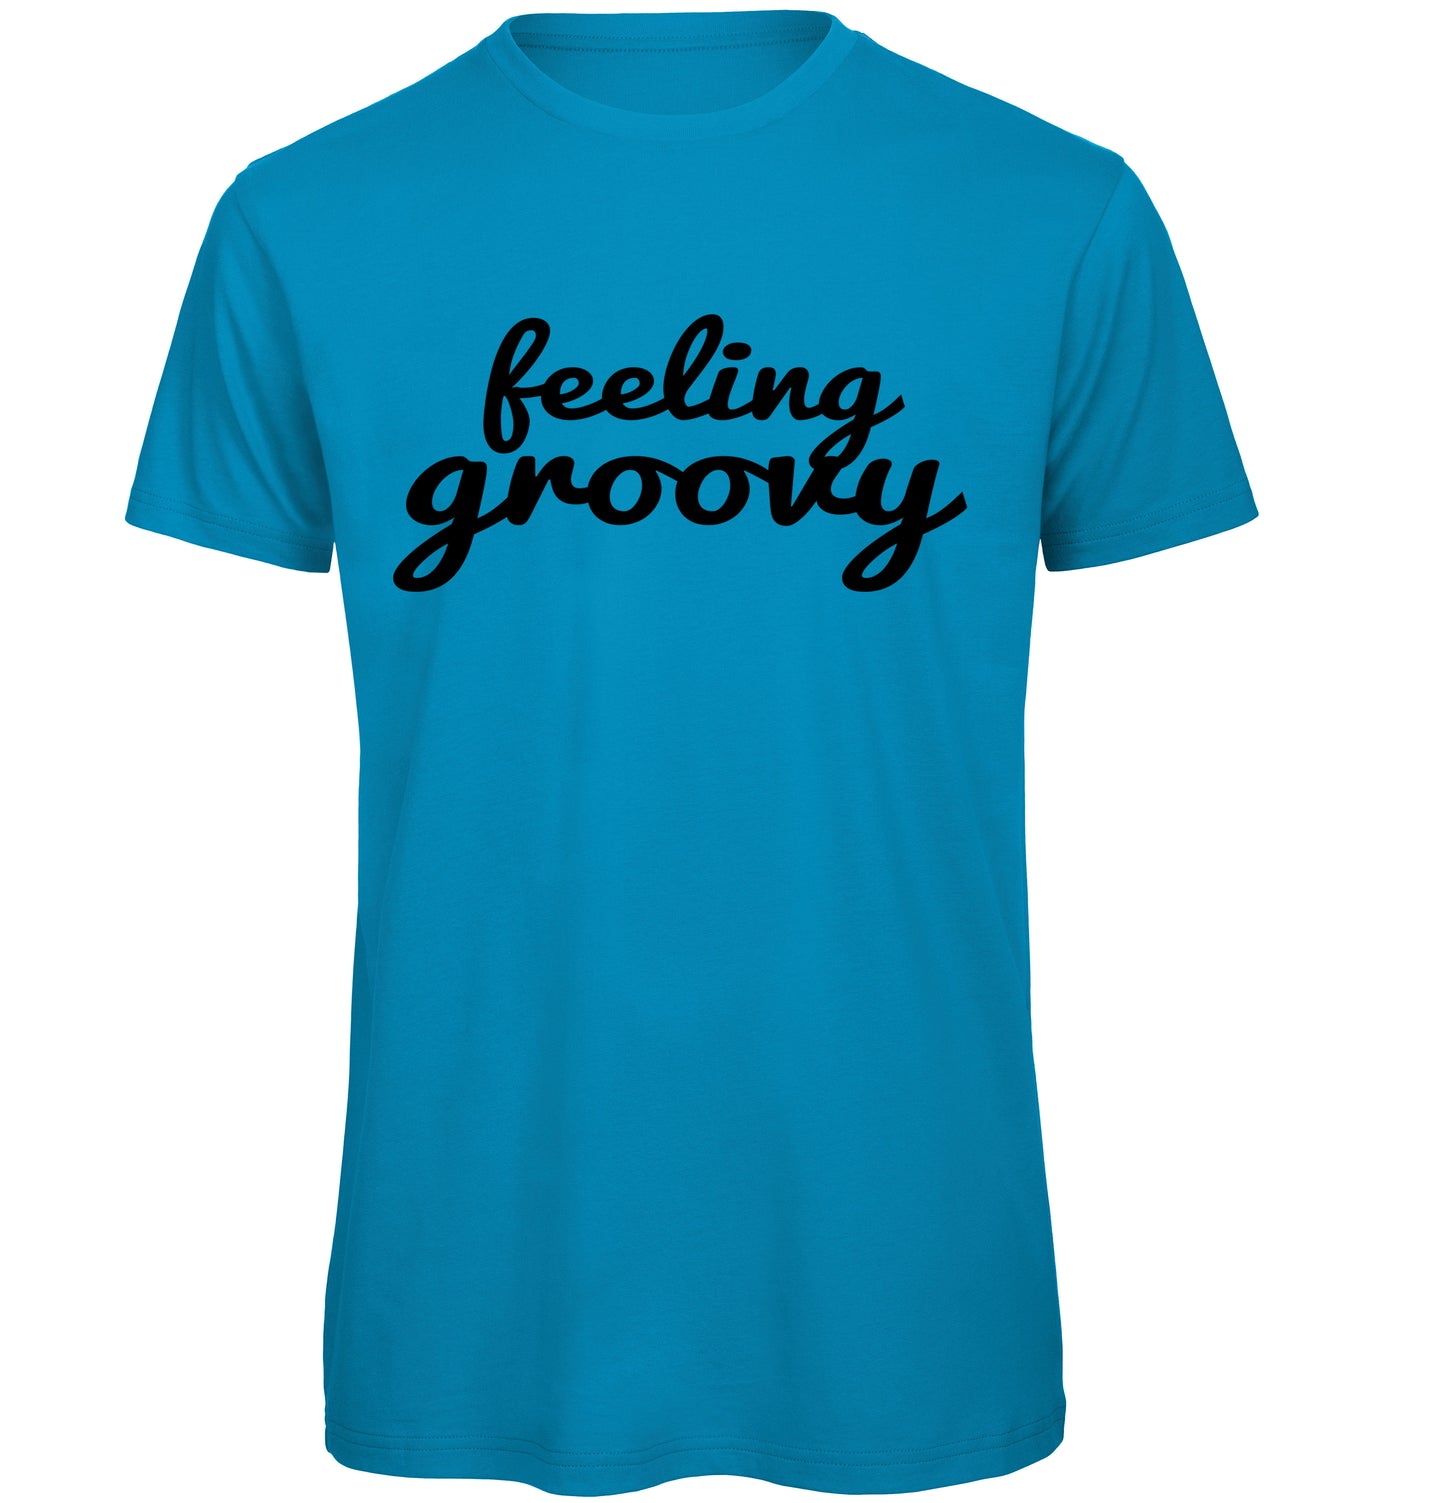 Feeling Groovy Organic T-Shirt - Scattee